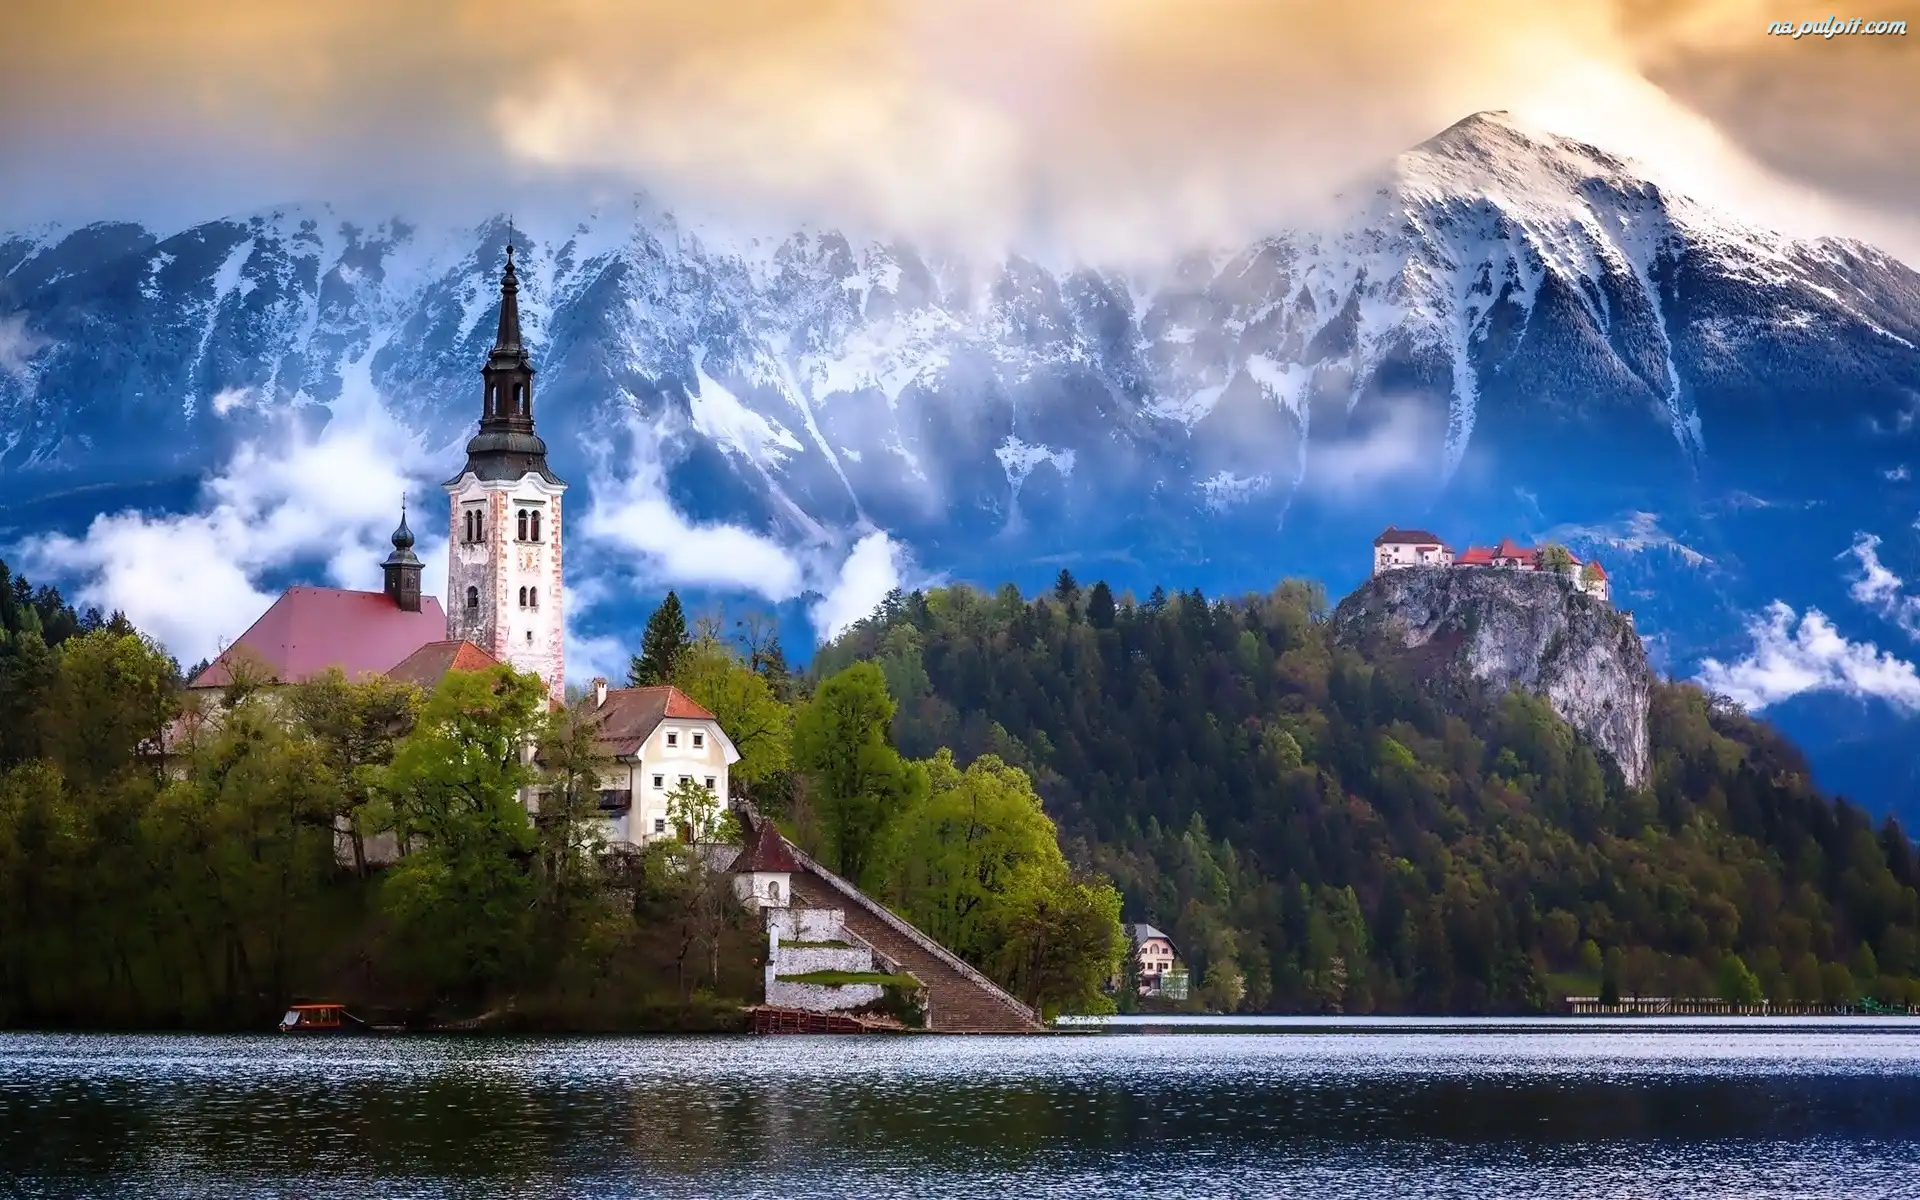 Słowenia, Góry, Zamek, Kościół, Las